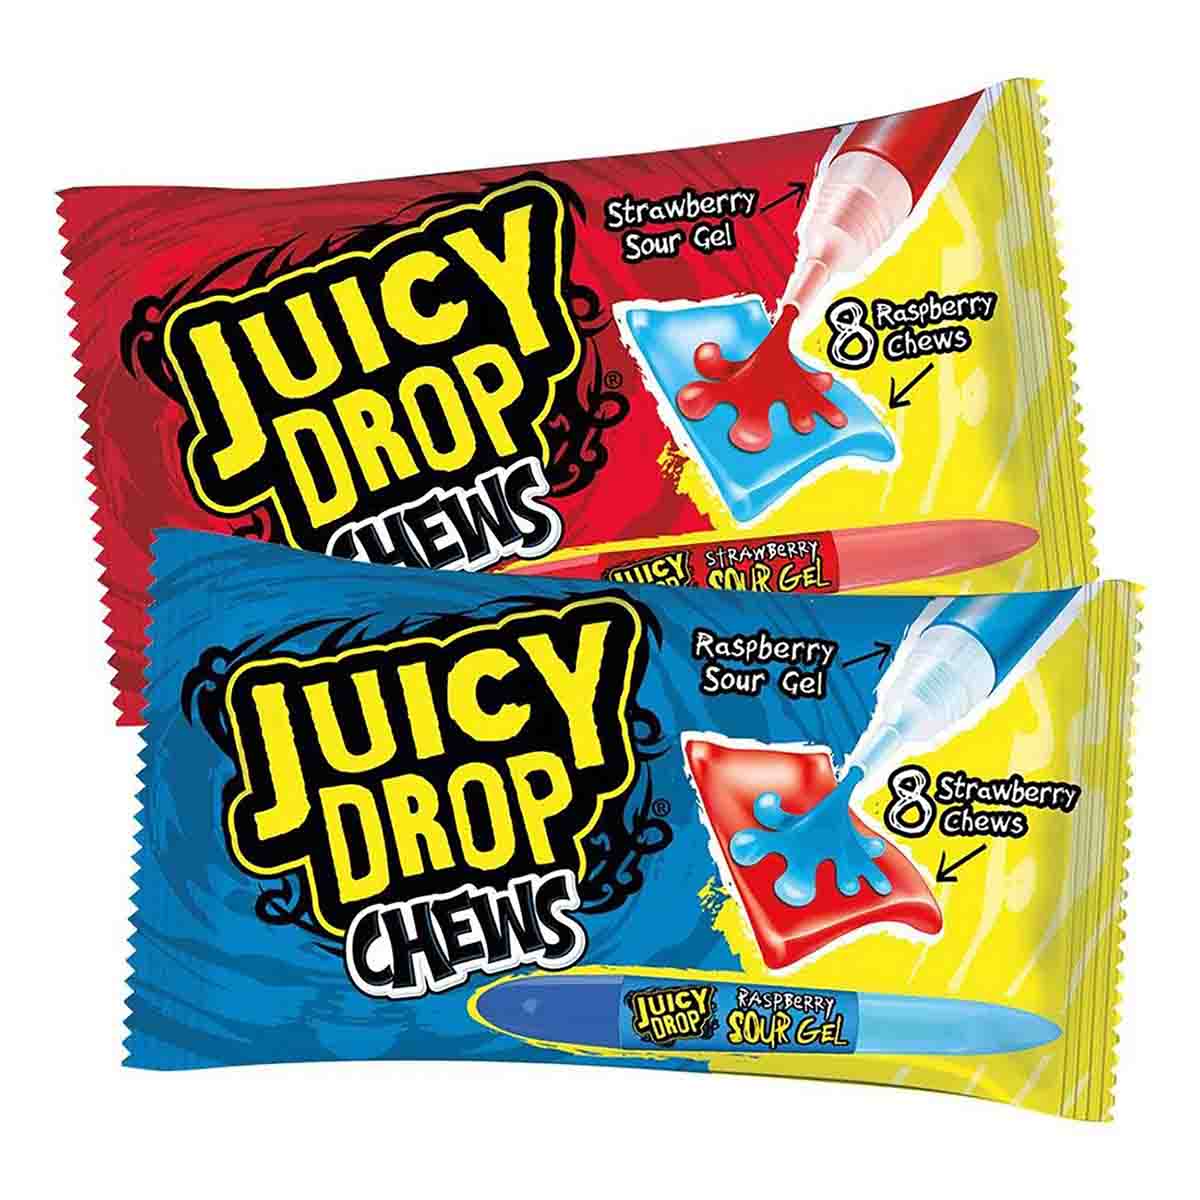 Godis, juicy drop chews med gel 67 g